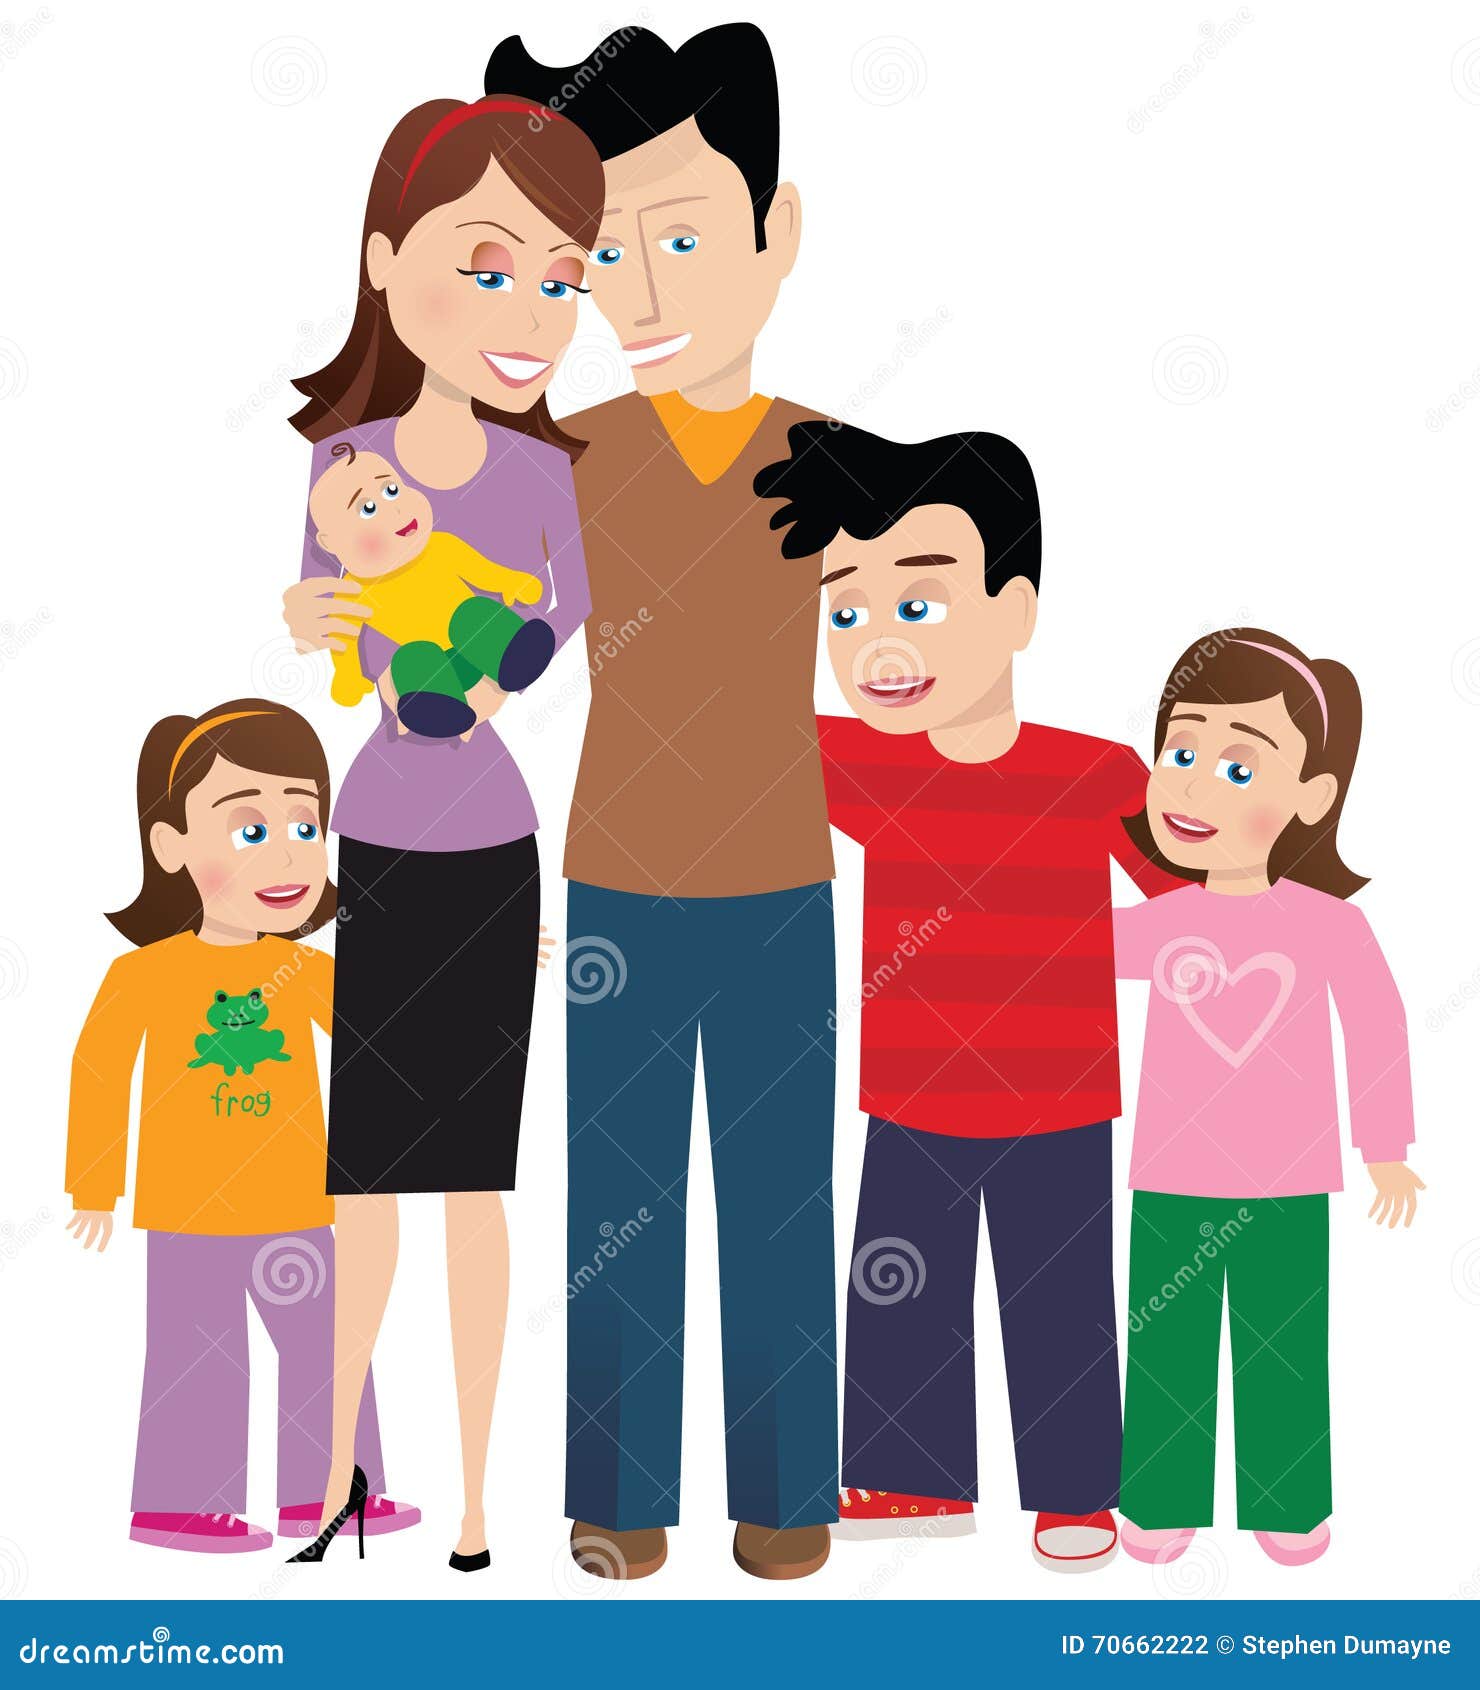 Large Family With Many Children Cartoon Vector | CartoonDealer.com